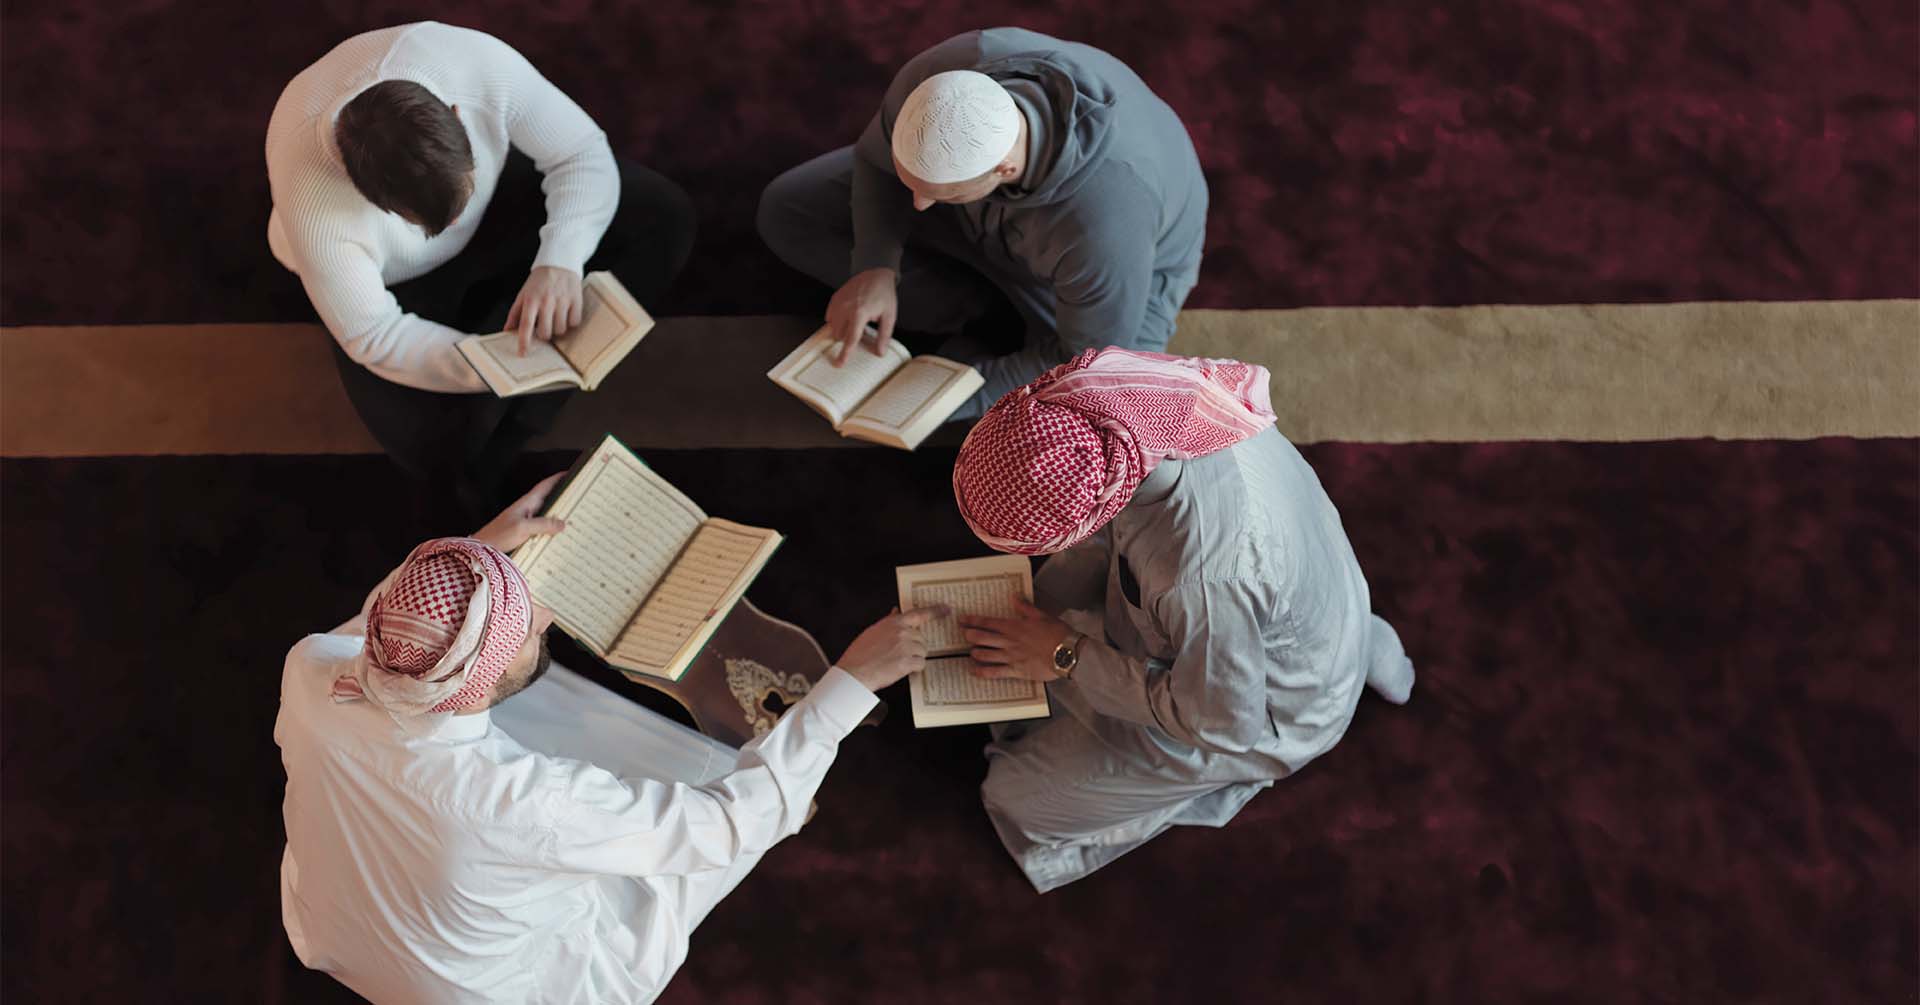 men gathered in a masjid reading quran together prayer timetables nottingham